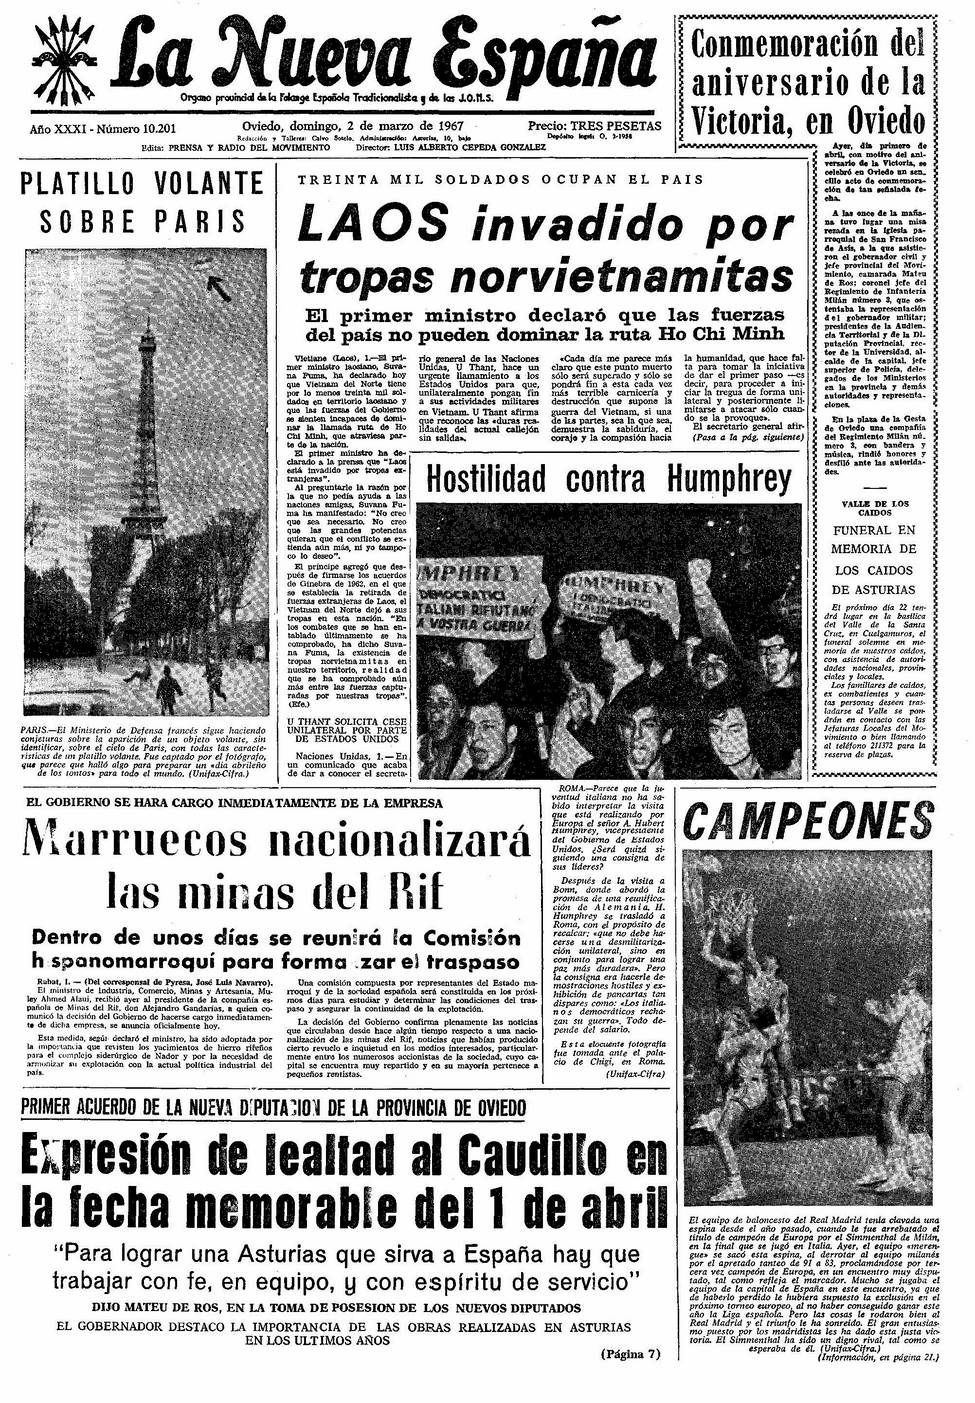 Portada del Domingo, 2 de Abril de 1967